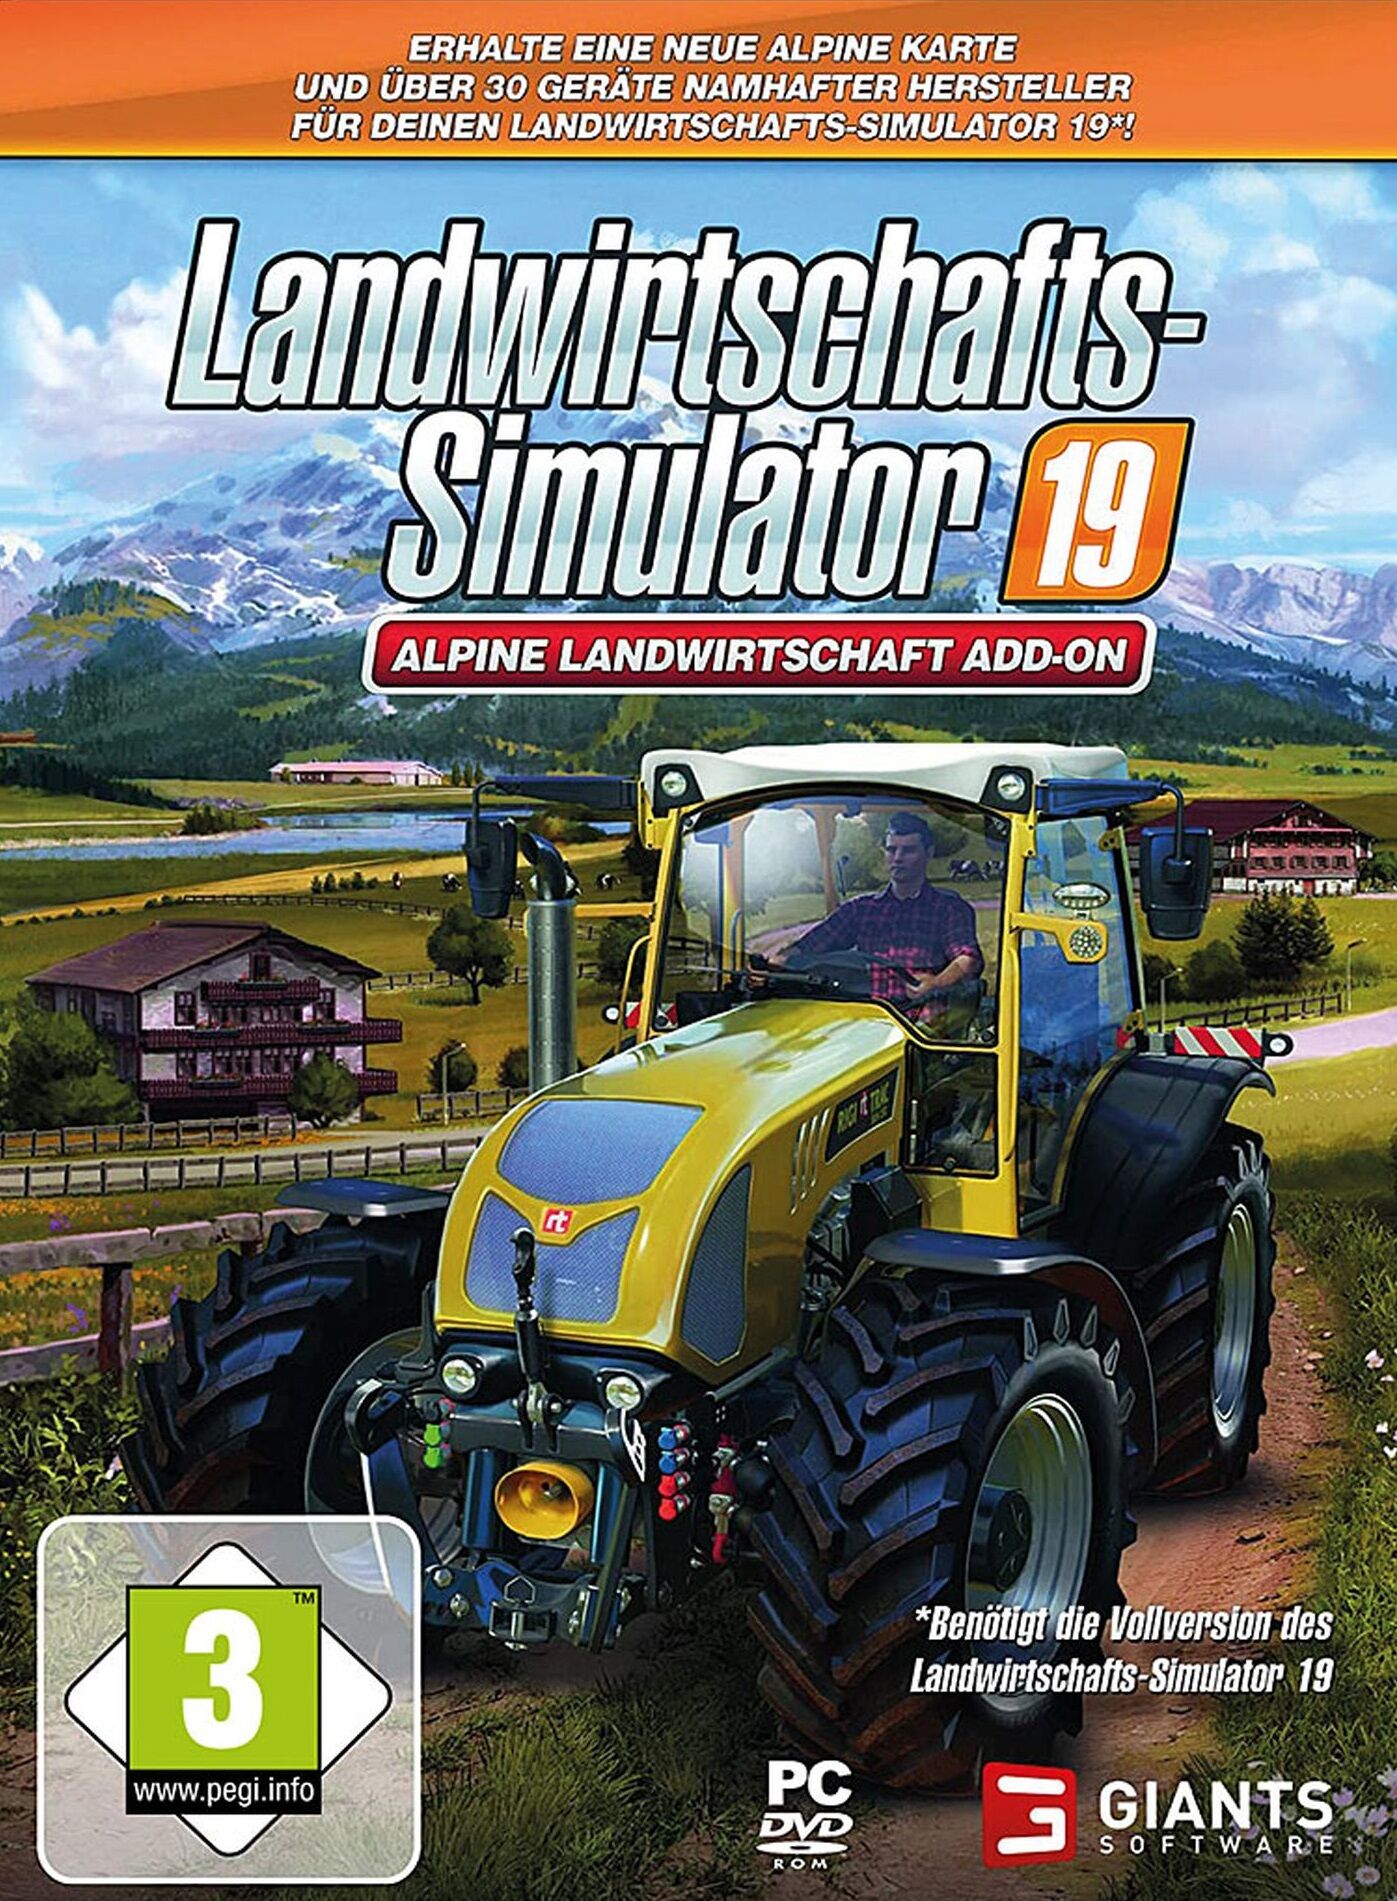 Divers GIANTS Software - Landwirtschafts-Simulator 19 - Alpine Landwirtschaft [Add-On] [DVD] [PC] (D)